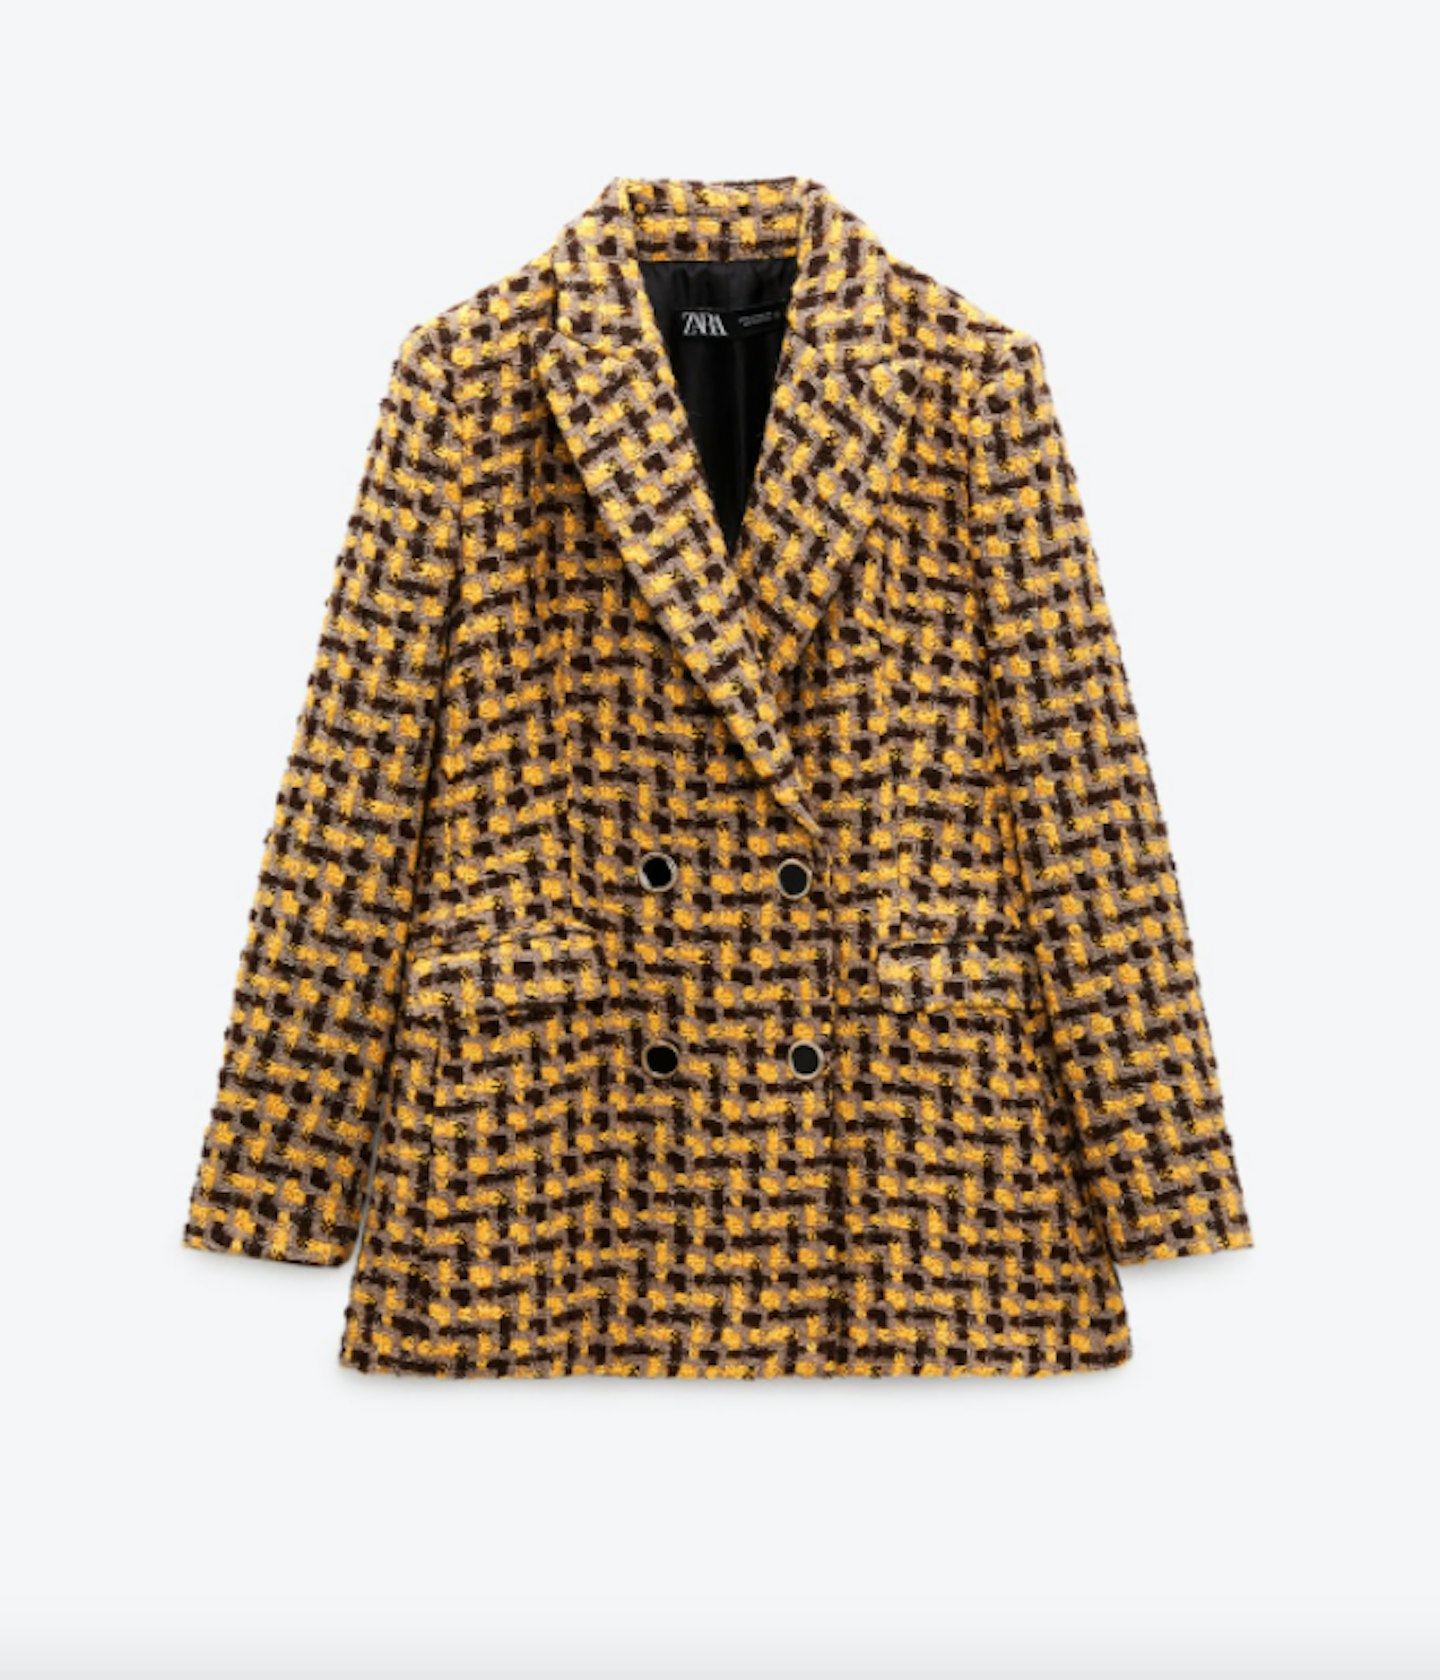 Zara, Textured Double-Breasted Blazer, £79.99